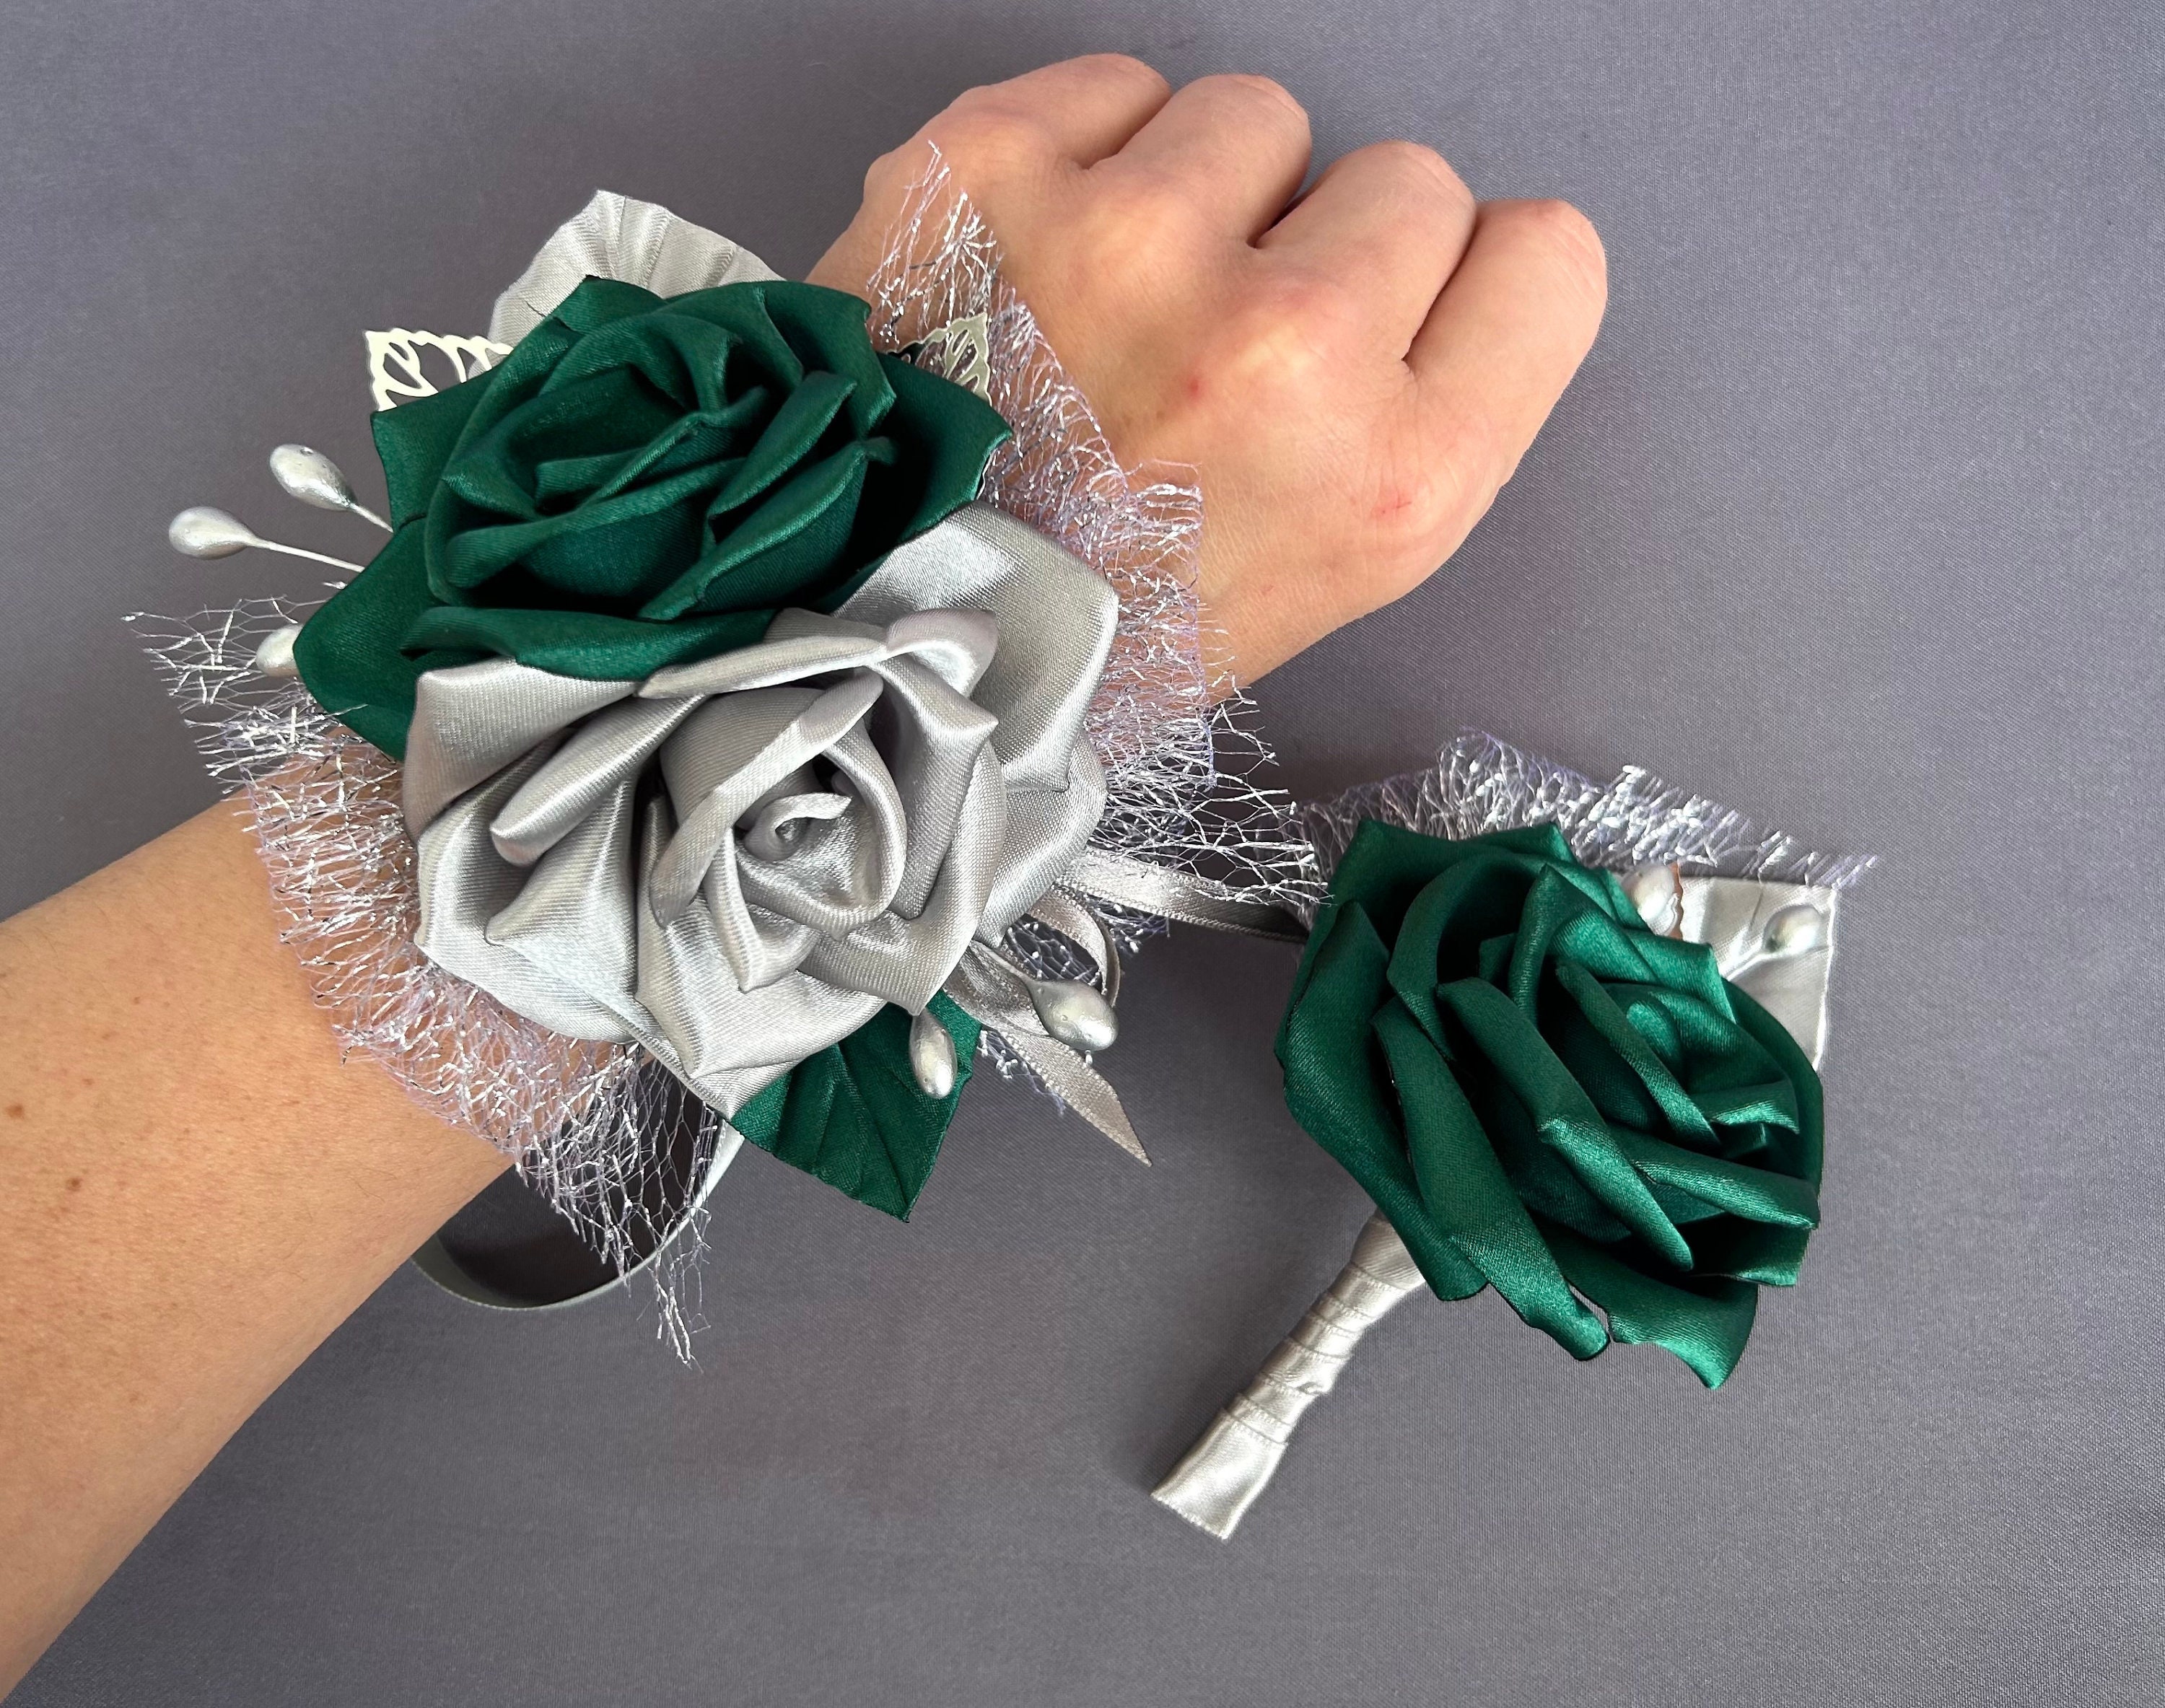 Rustic Wedding Wrist Corsage White Green Prom Flower Bracelet 